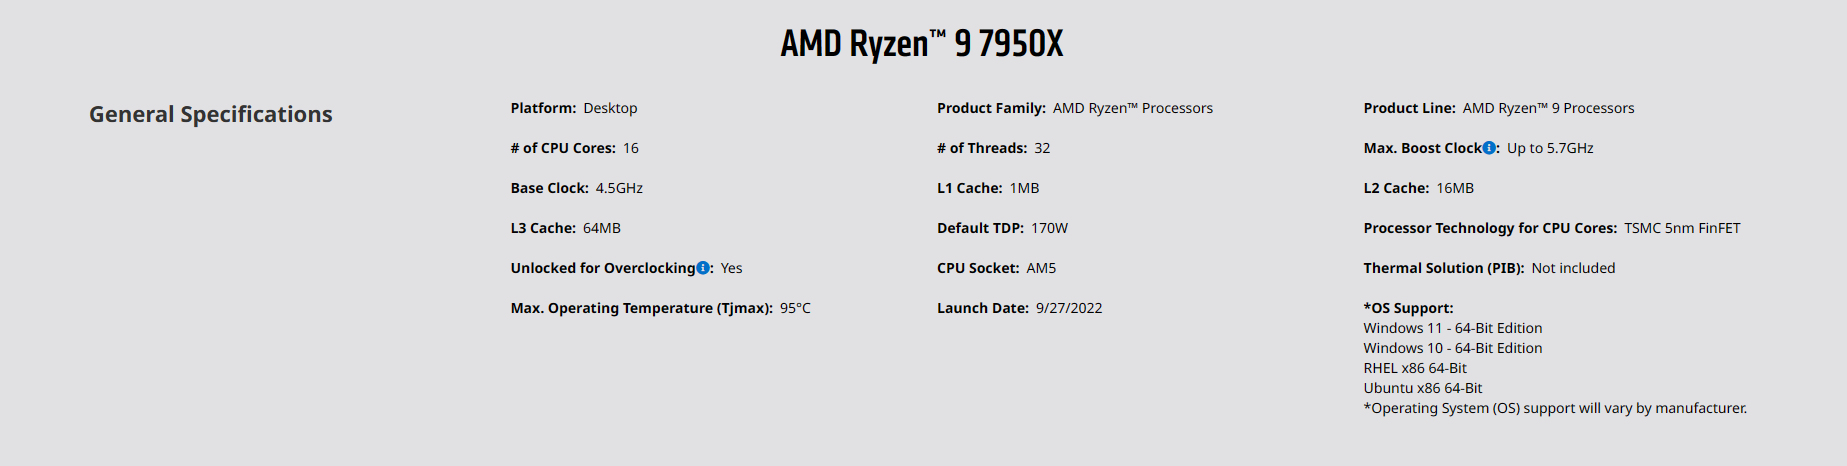 review AMD Ryzen 9 7950X